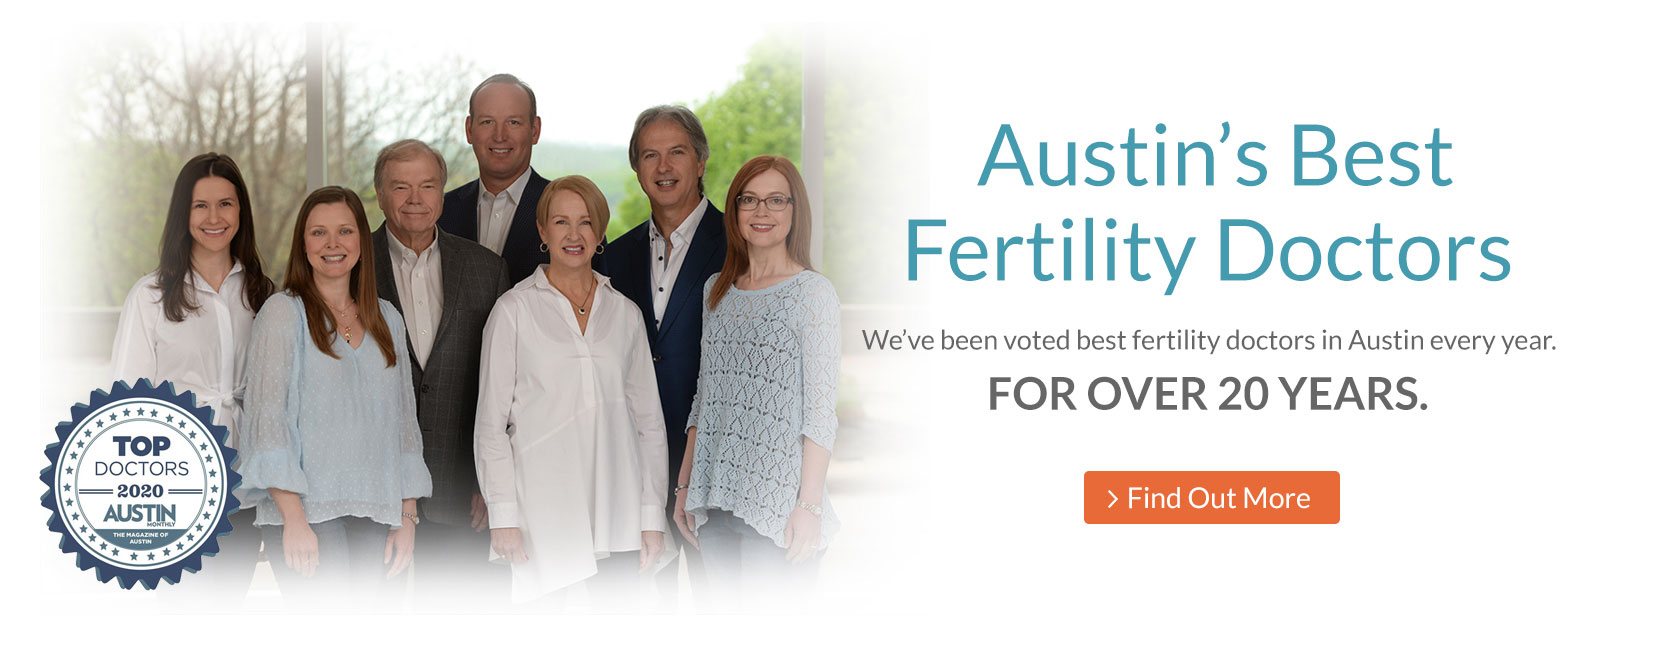 Austin's Best Fertility Doctors - We've been voted best fertility doctors in Austin every year.